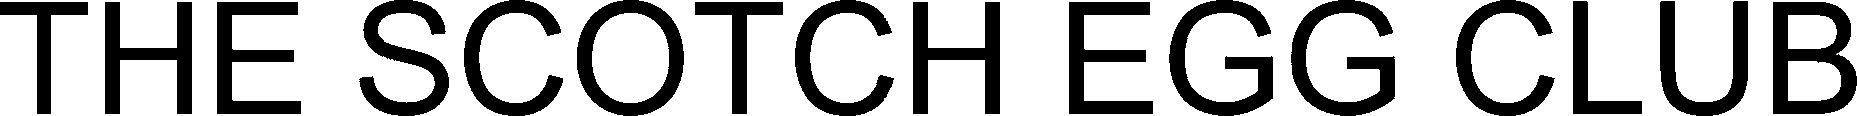 Trademark Logo THE SCOTCH EGG CLUB